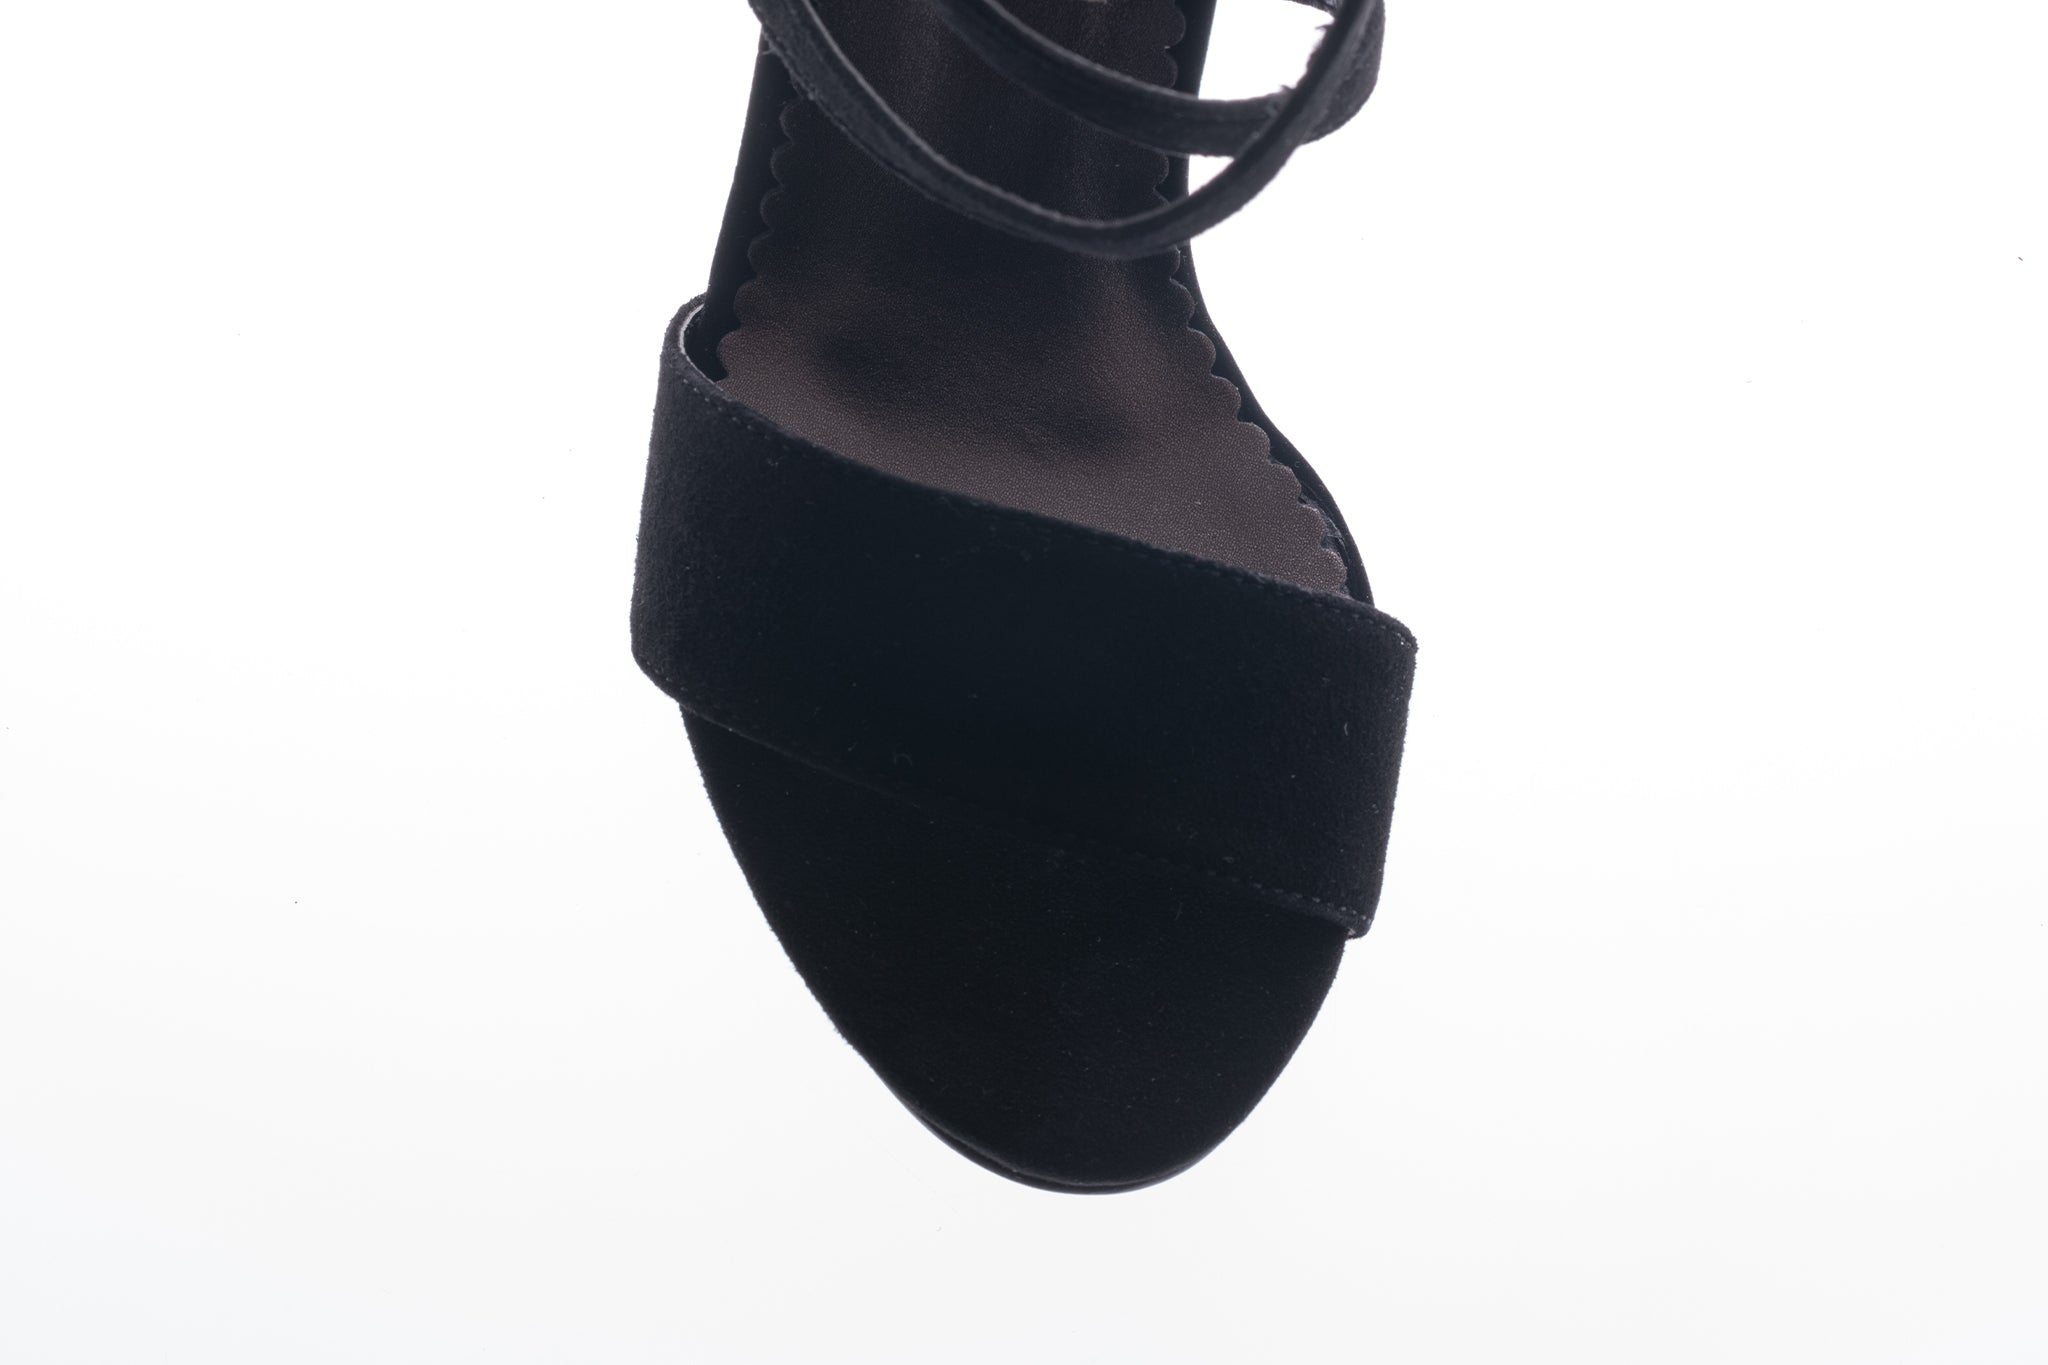 Sandale dama elegante piele naturala A 41 negru velur